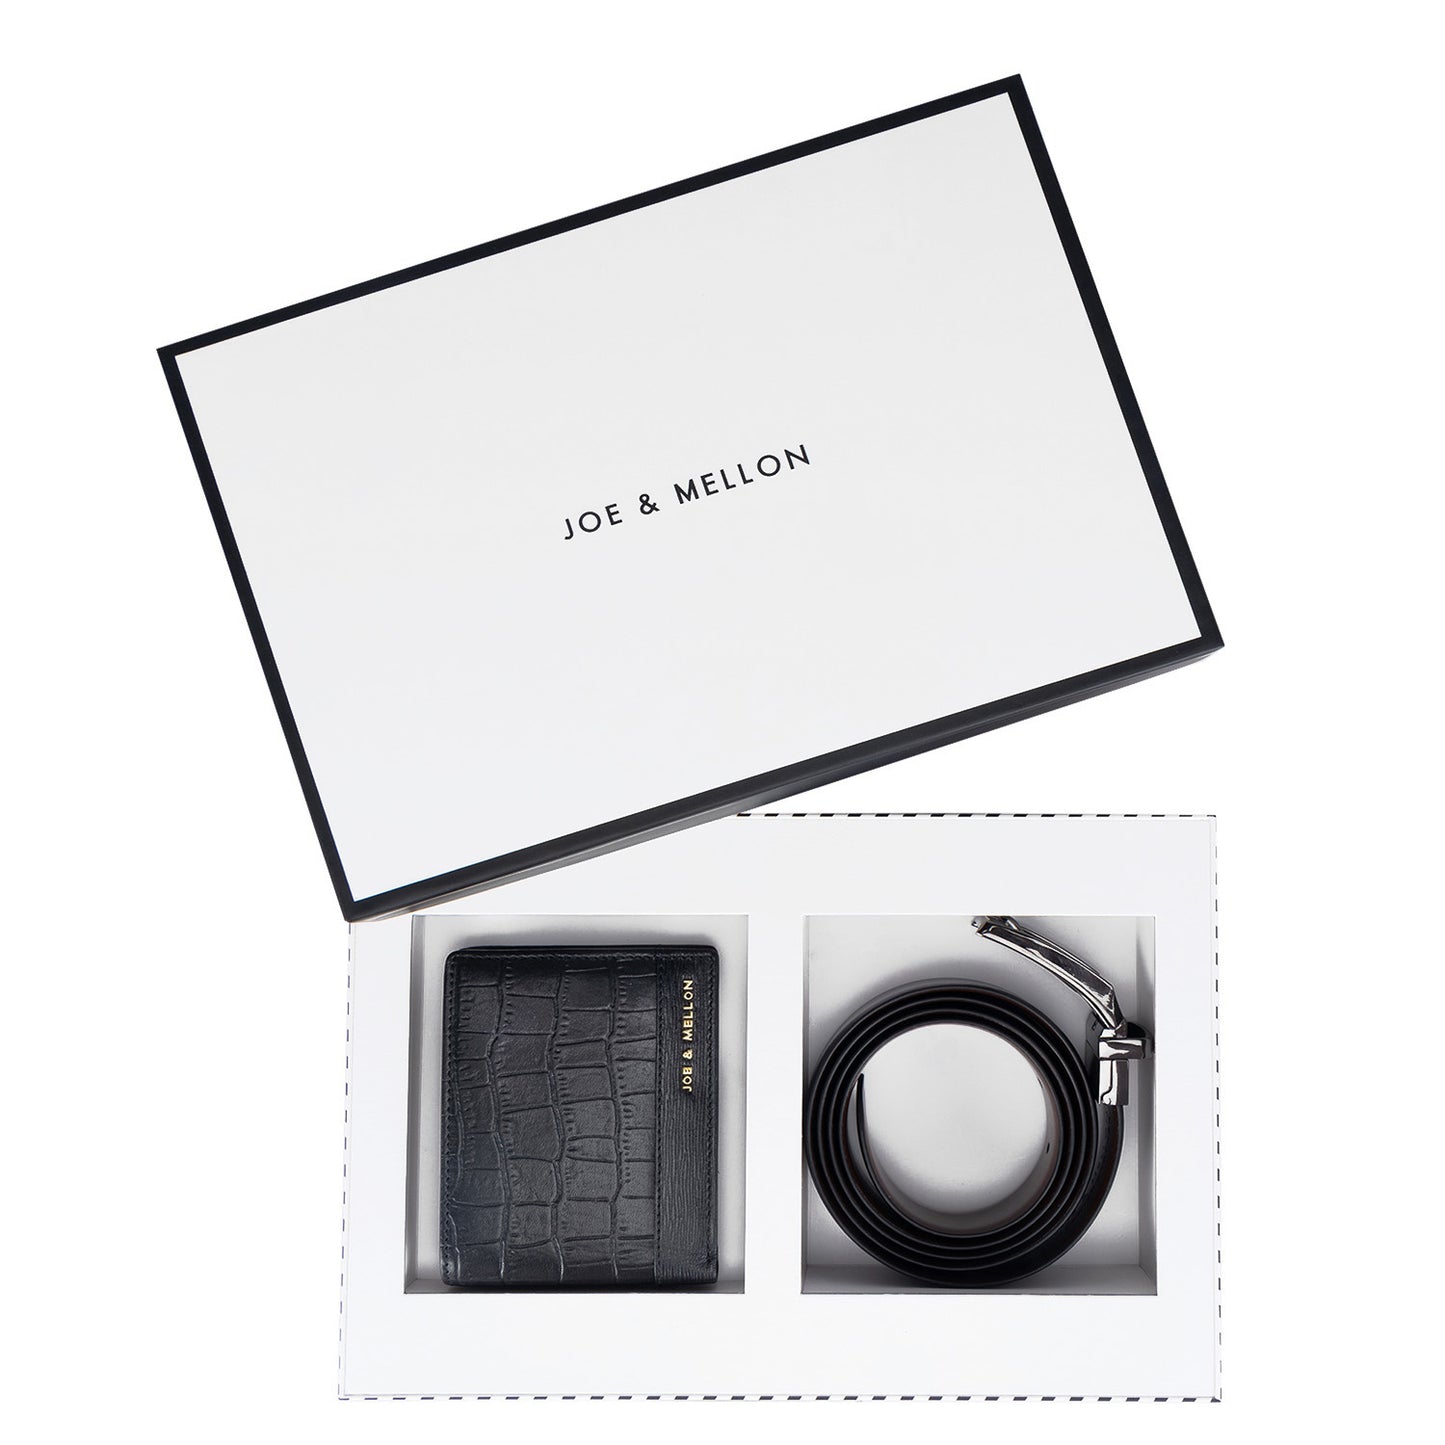 Locus Men Wallet & Belt Gift Set- Black